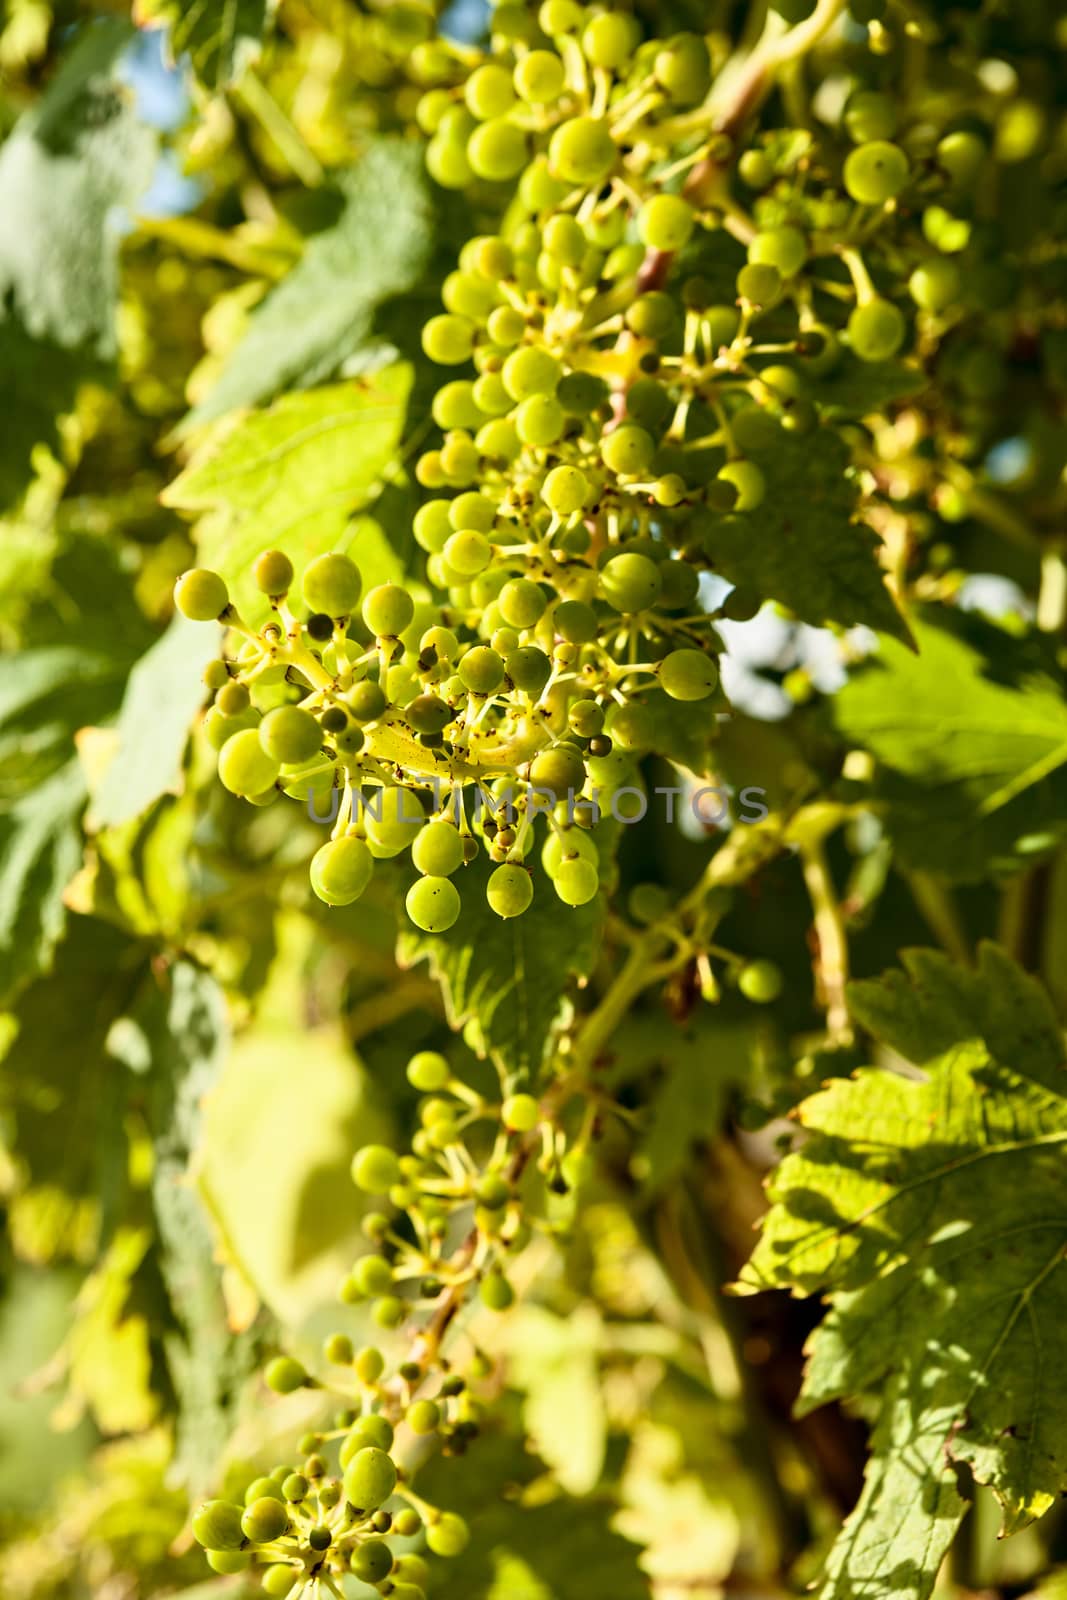 Closeup of small green grapes by LuigiMorbidelli